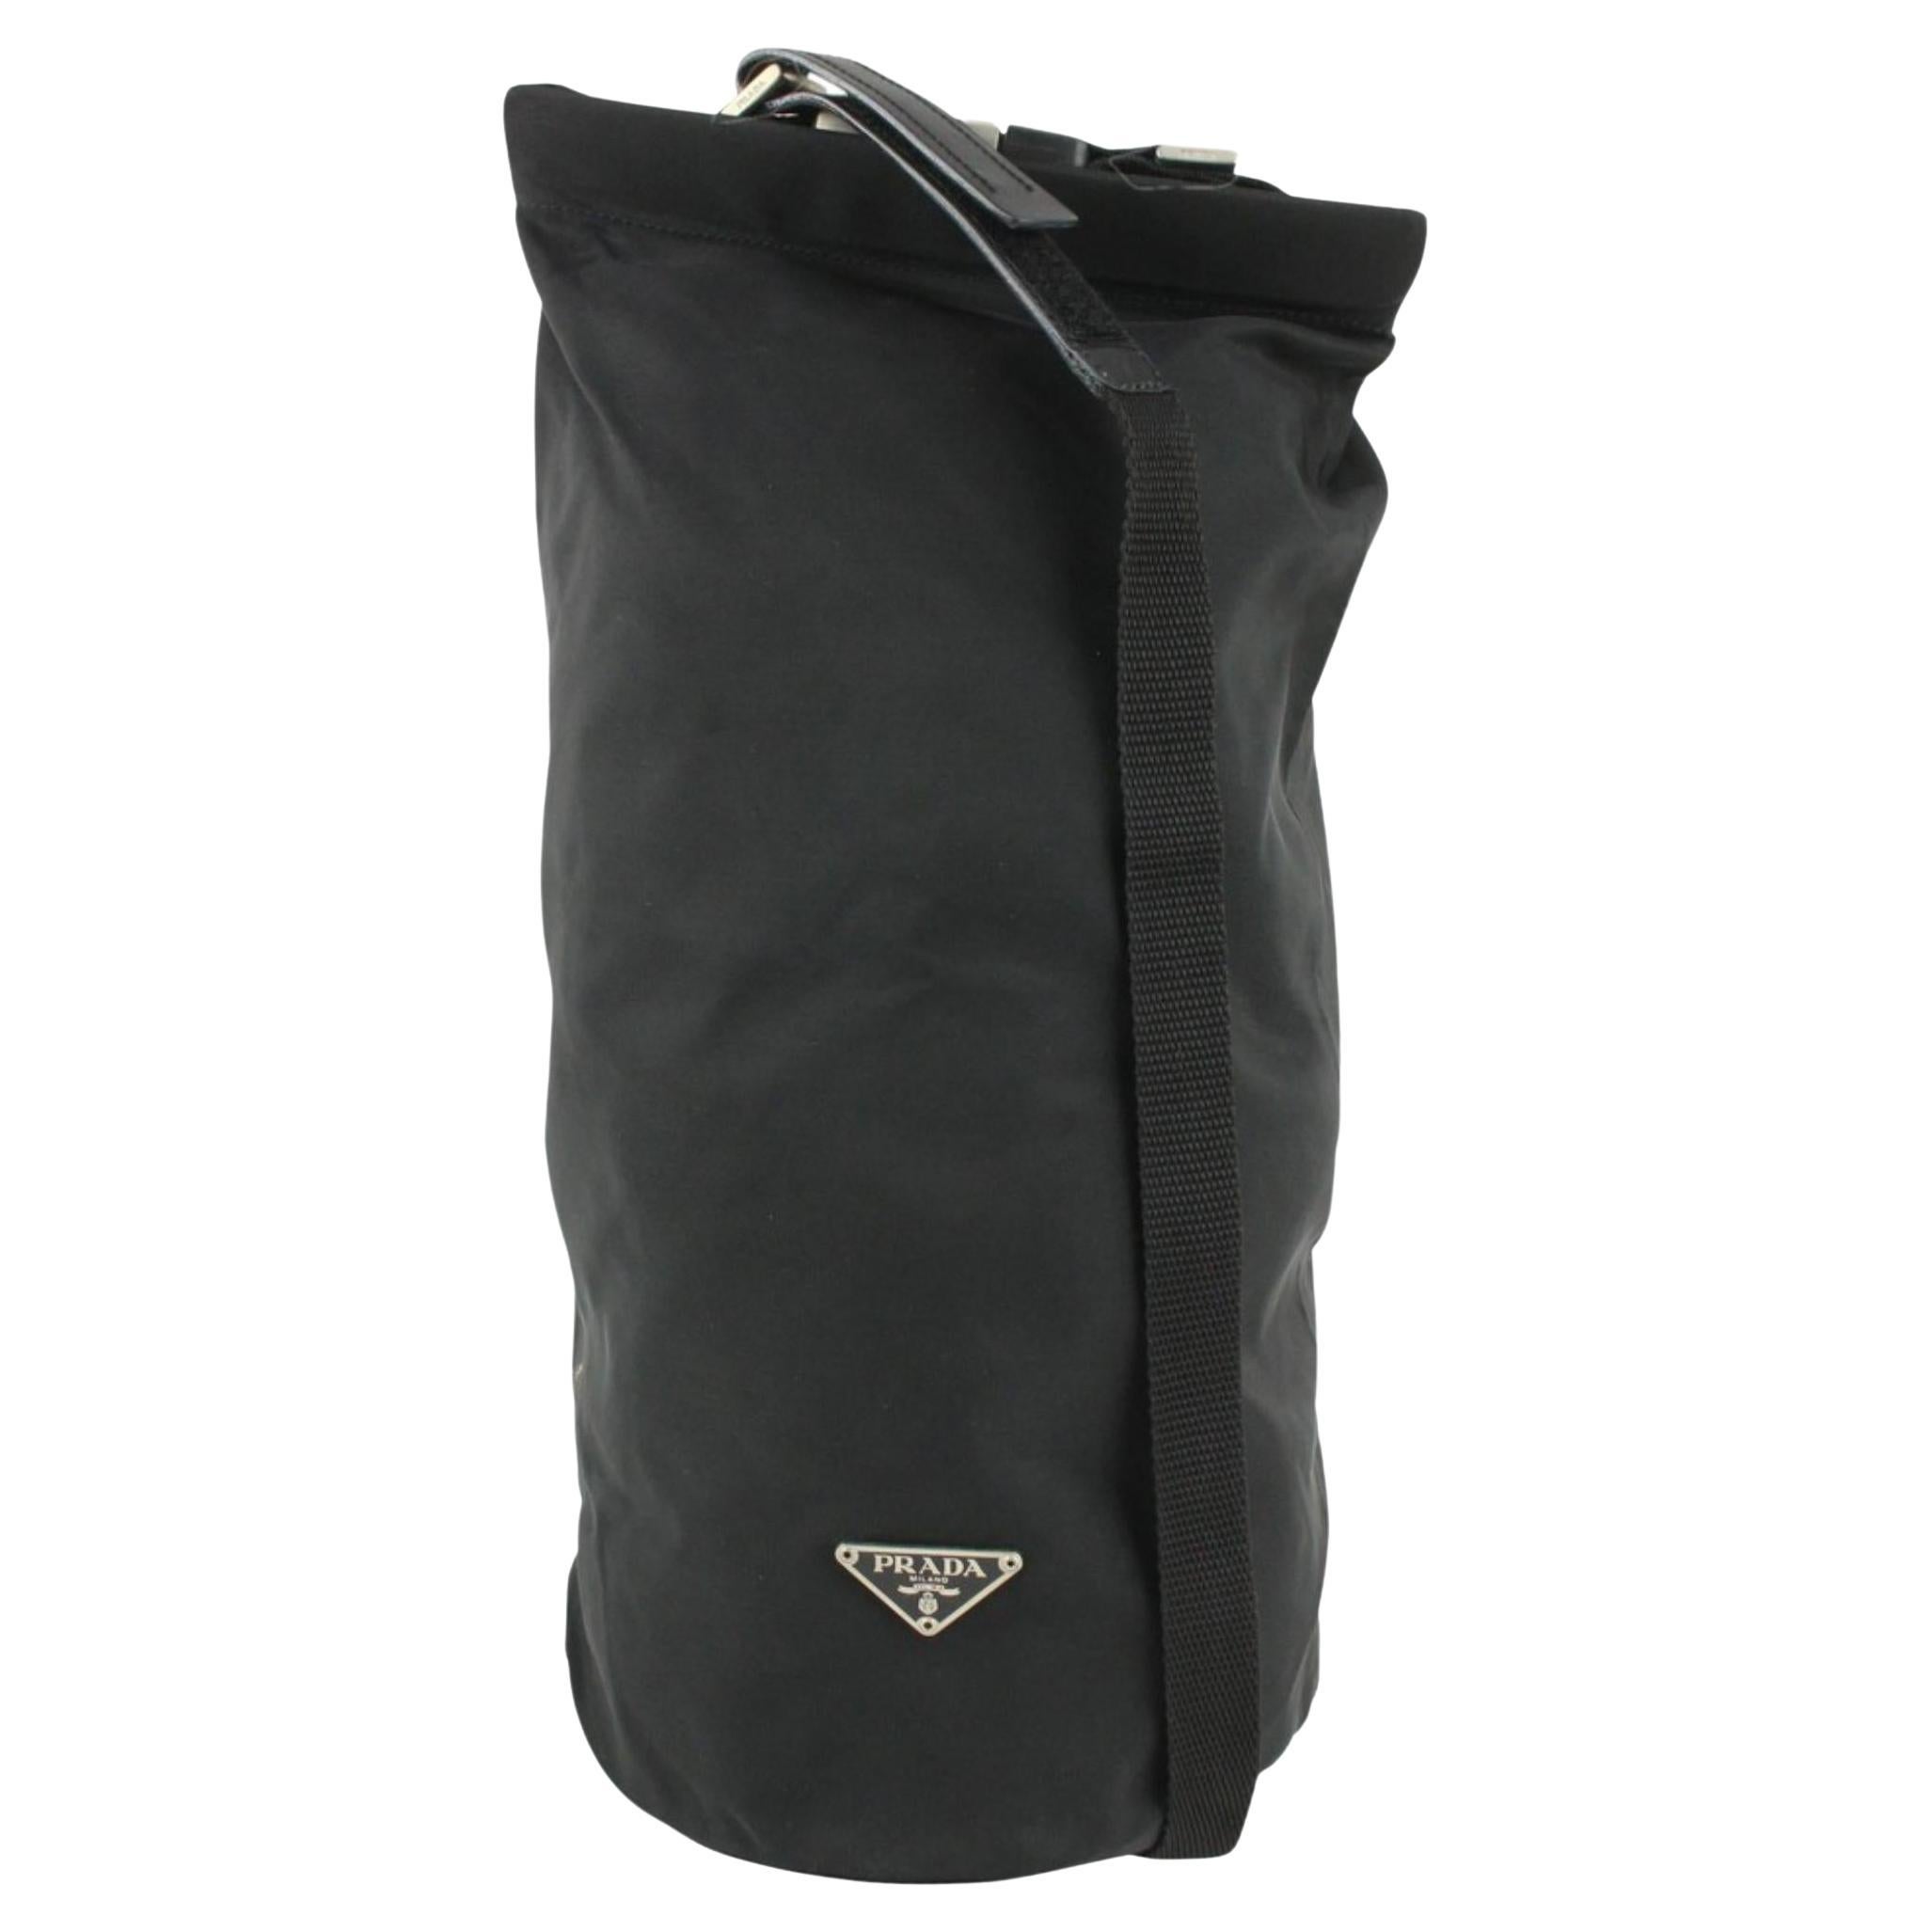 Prada Black Nylon Tessuto Sling Bag Wine Holder 1026p48